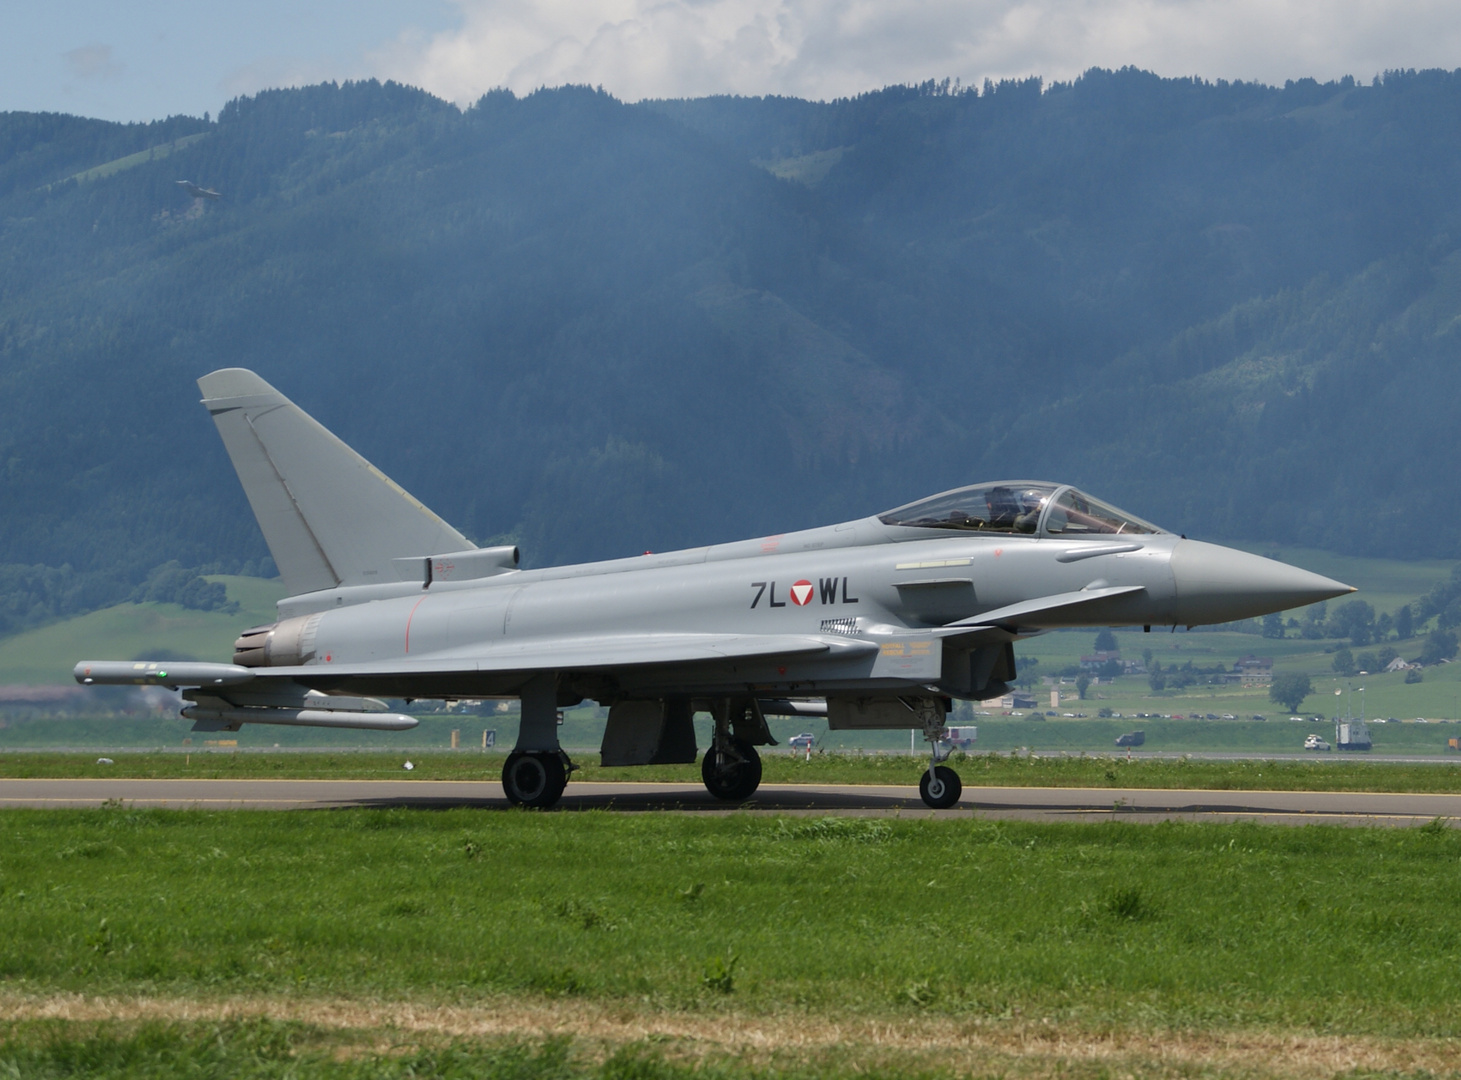 Eurofighter Typhoon am Boden